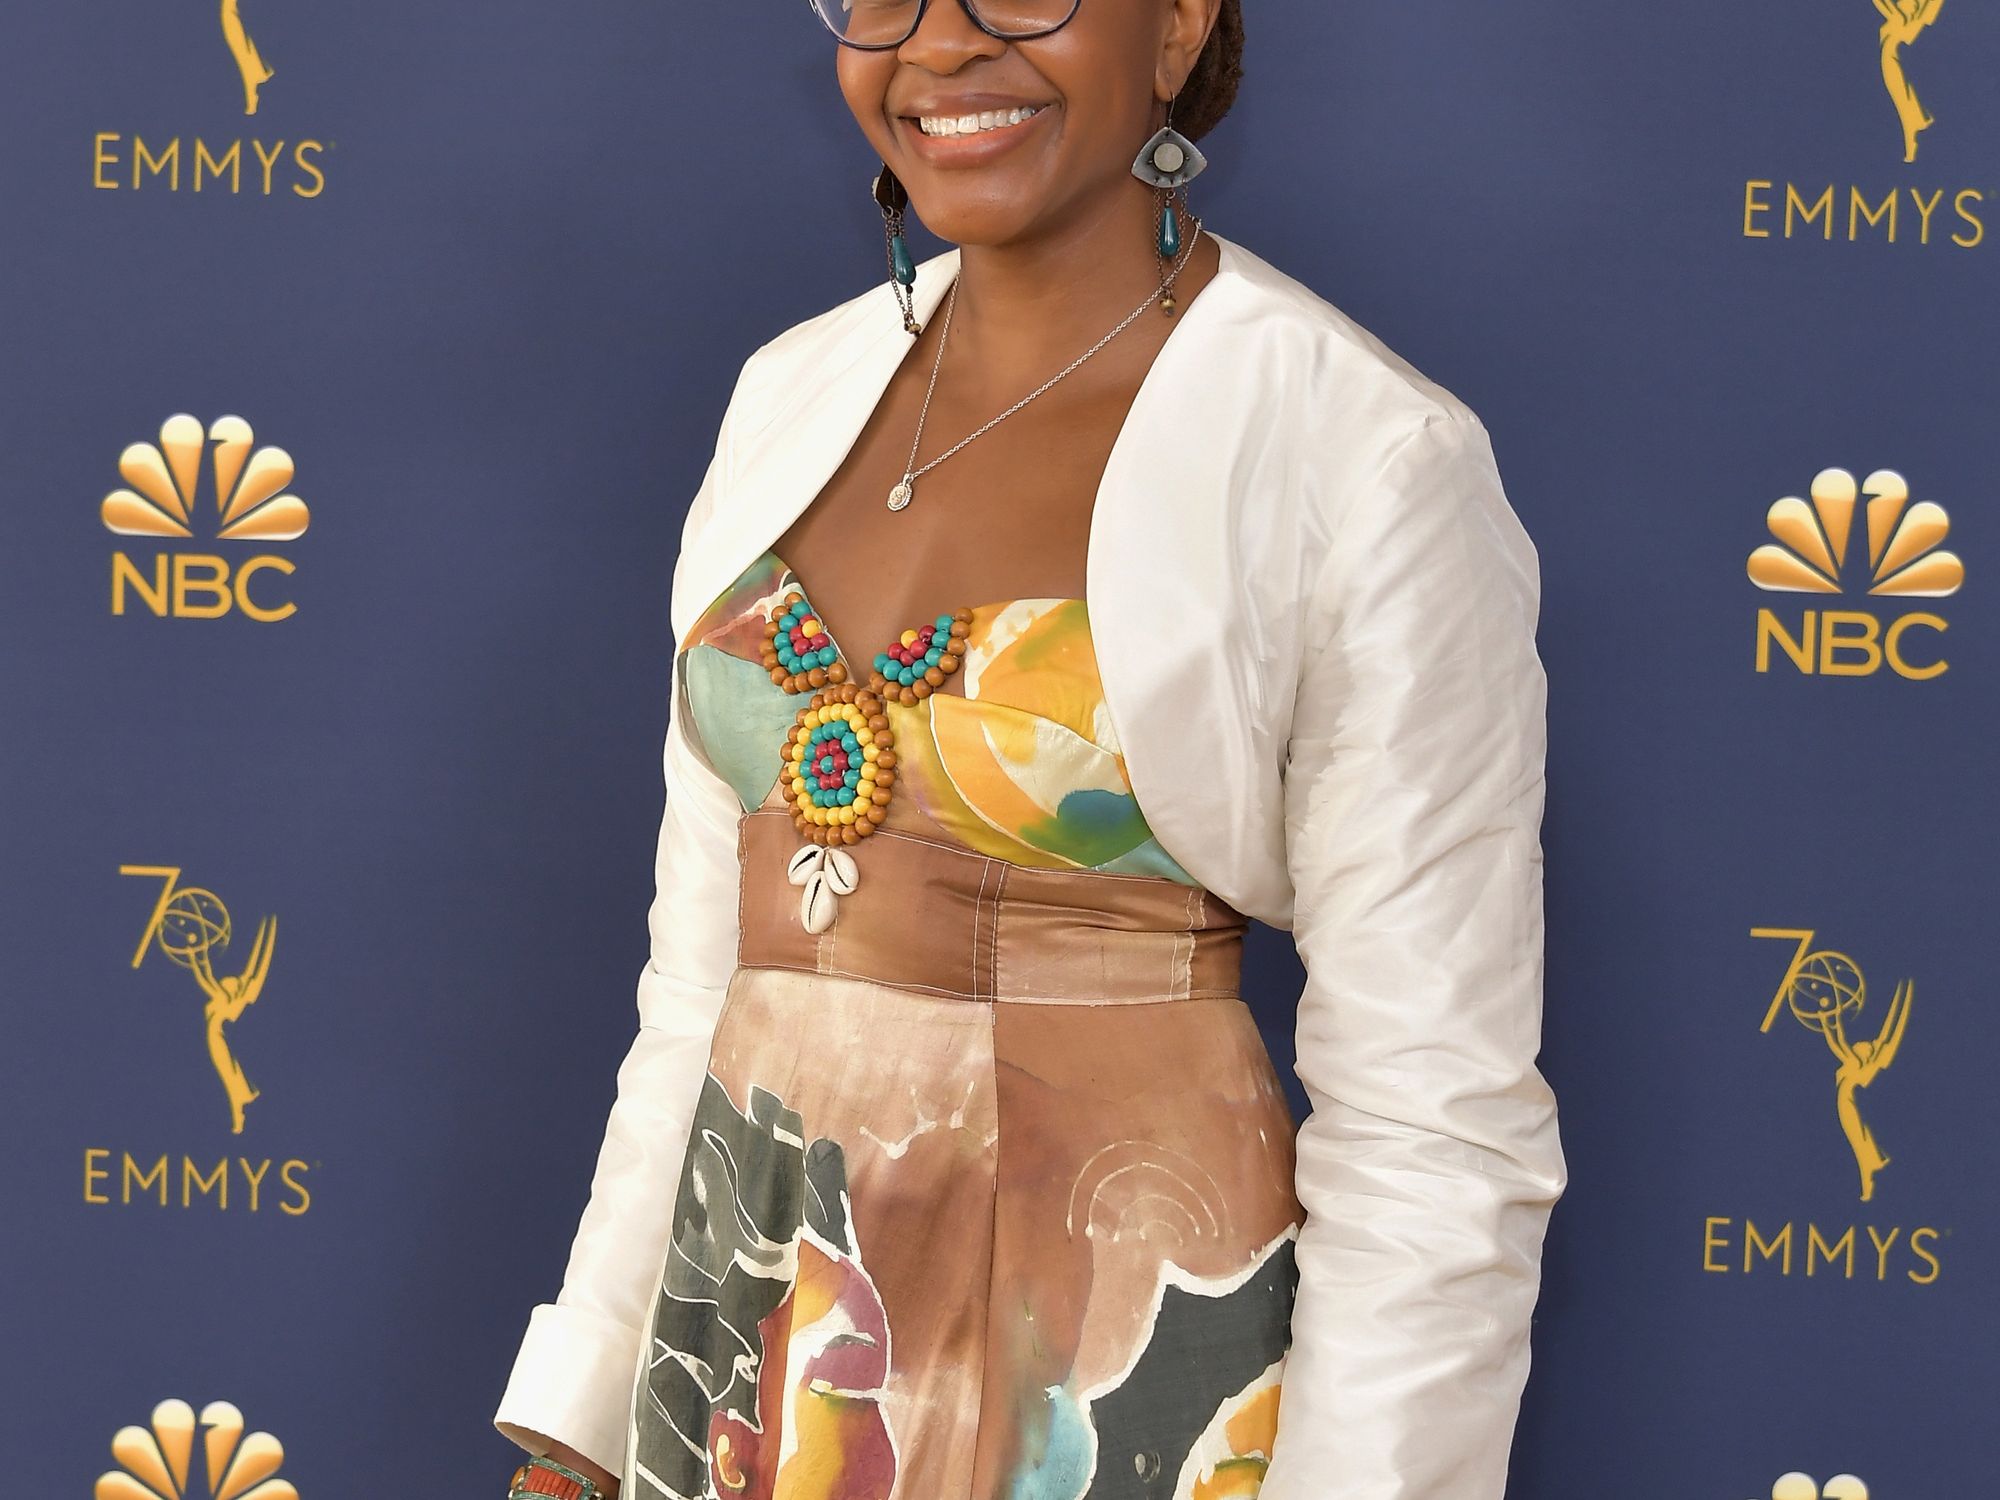 Nnedi Okorafor's 'Binti' Is Being Developed Into a TV Series at Hulu